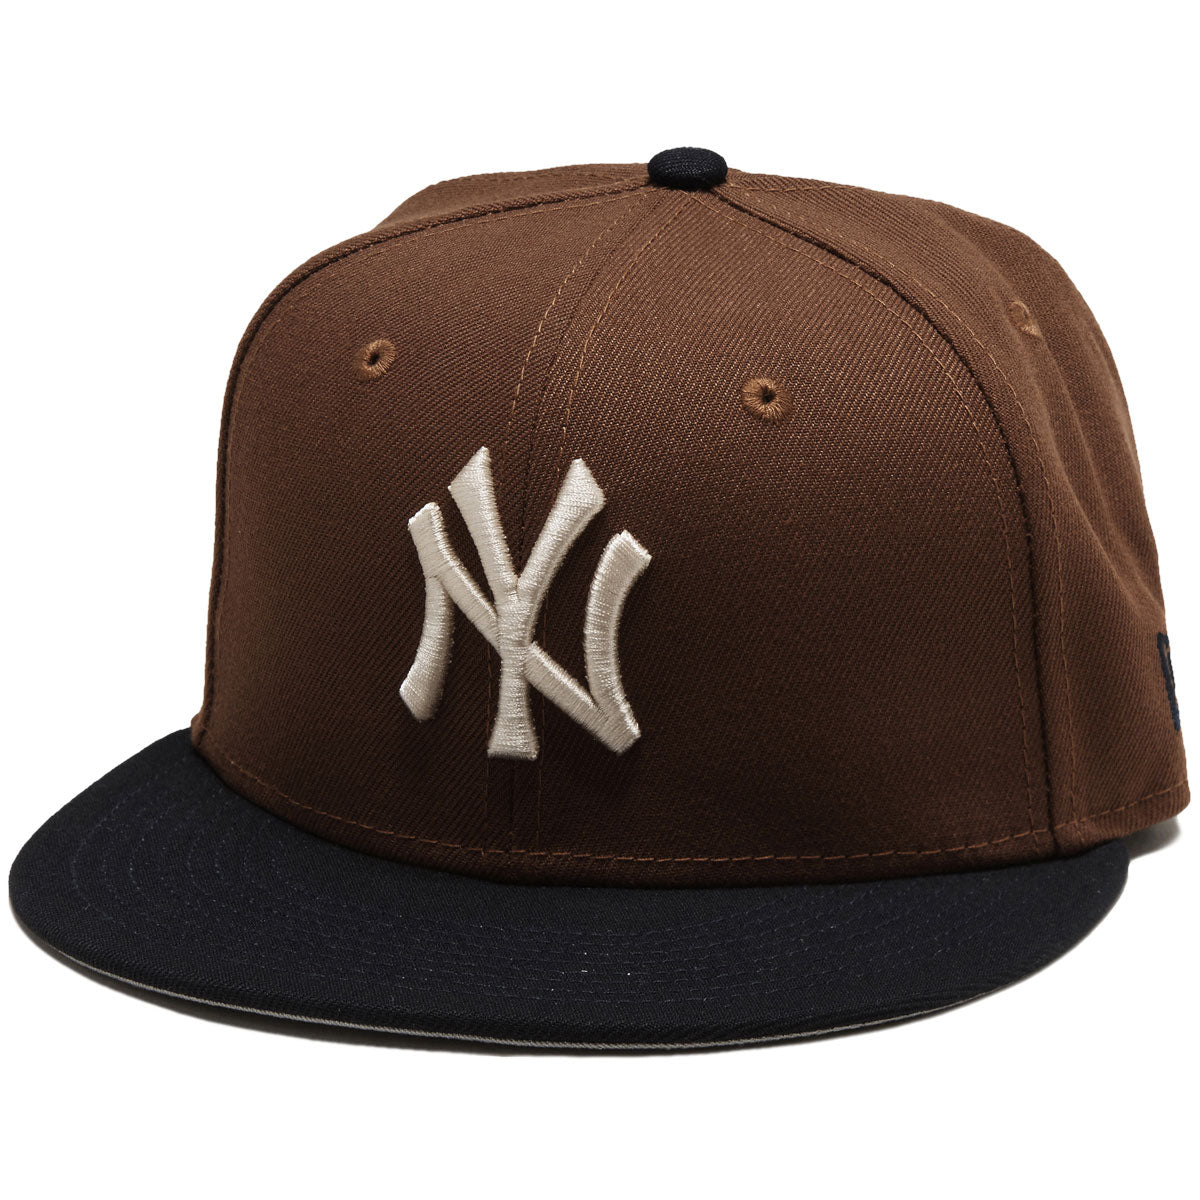 New Era Harvest 5950 17202 New York Yankees Hat - Brown/Navy image 1